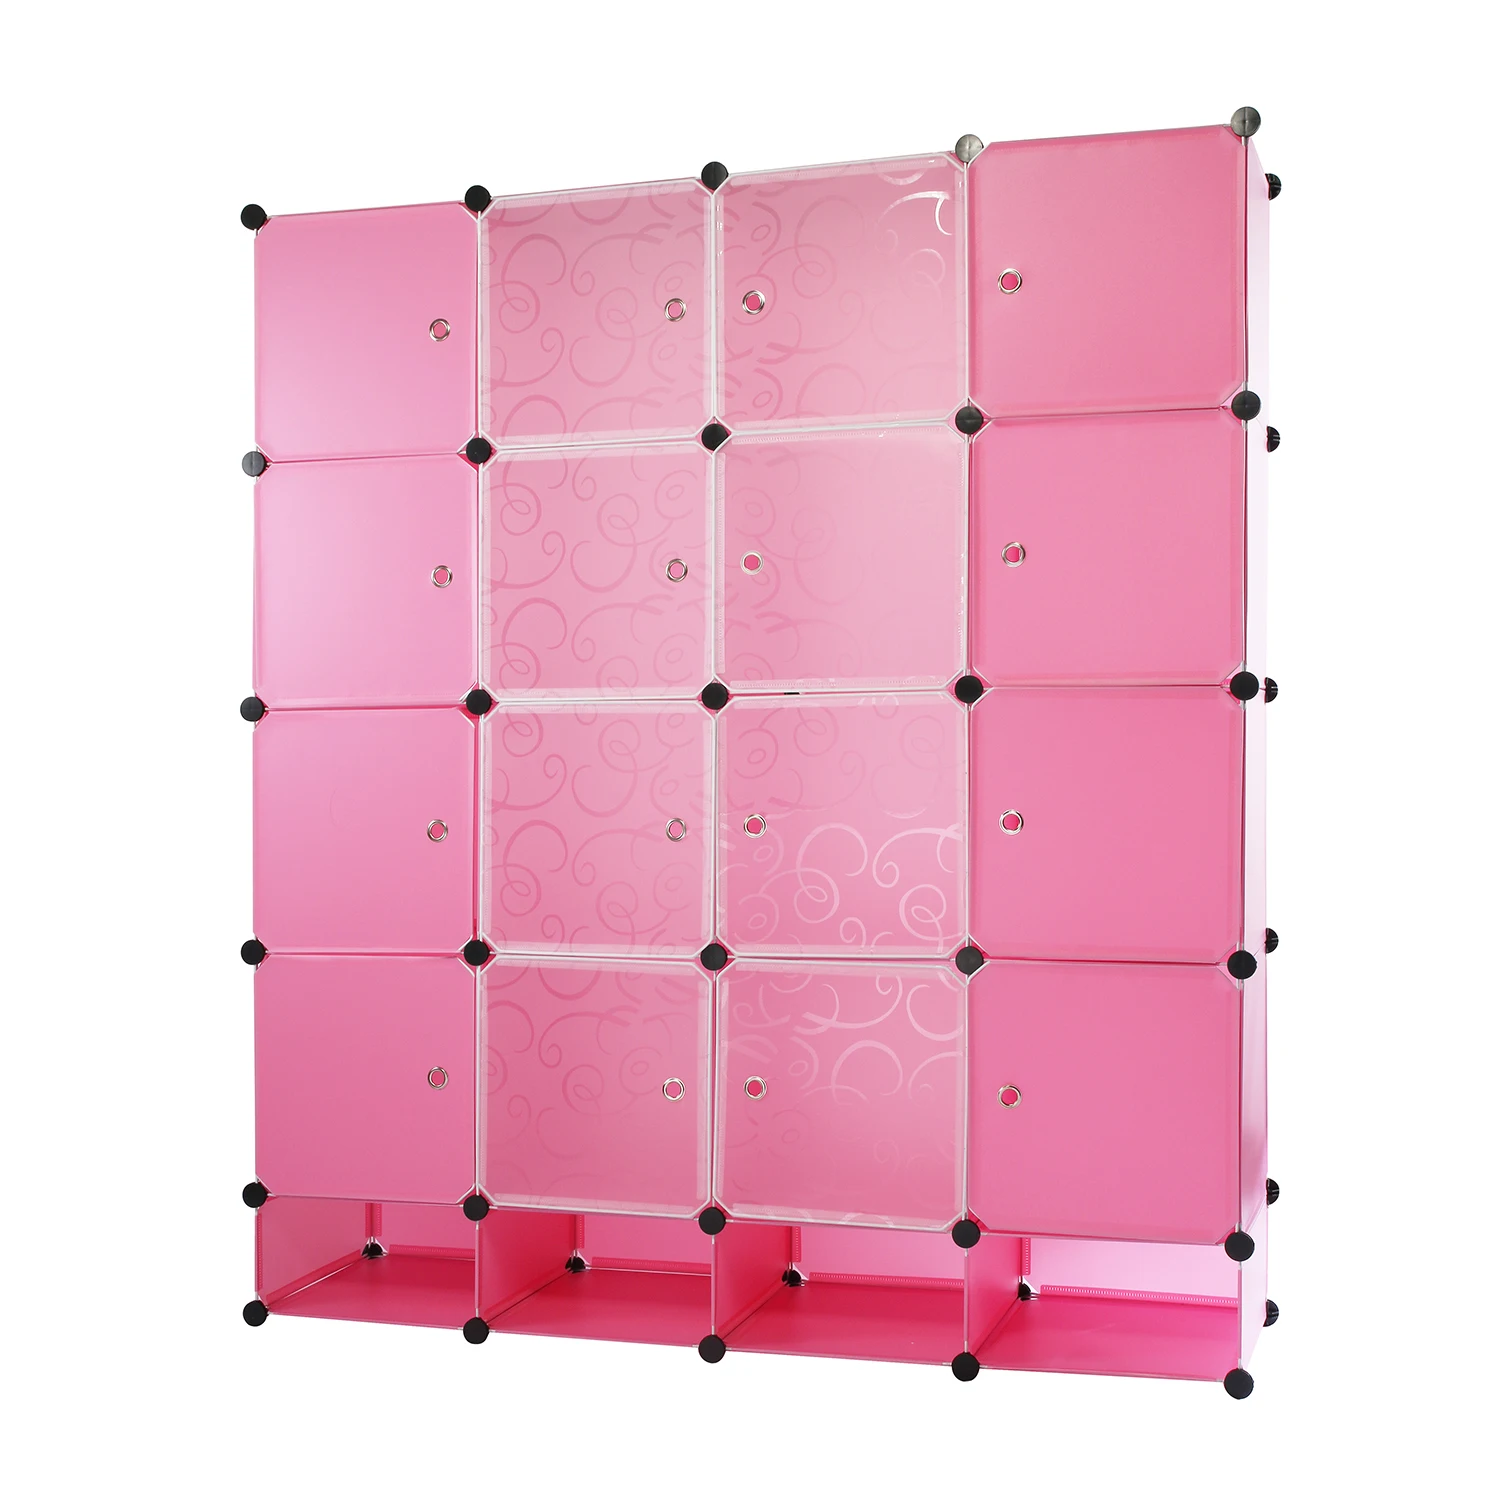 
Interlocking Popular Plastic PP Storage Cube Organizer Shelves Closet Decorative Closet 